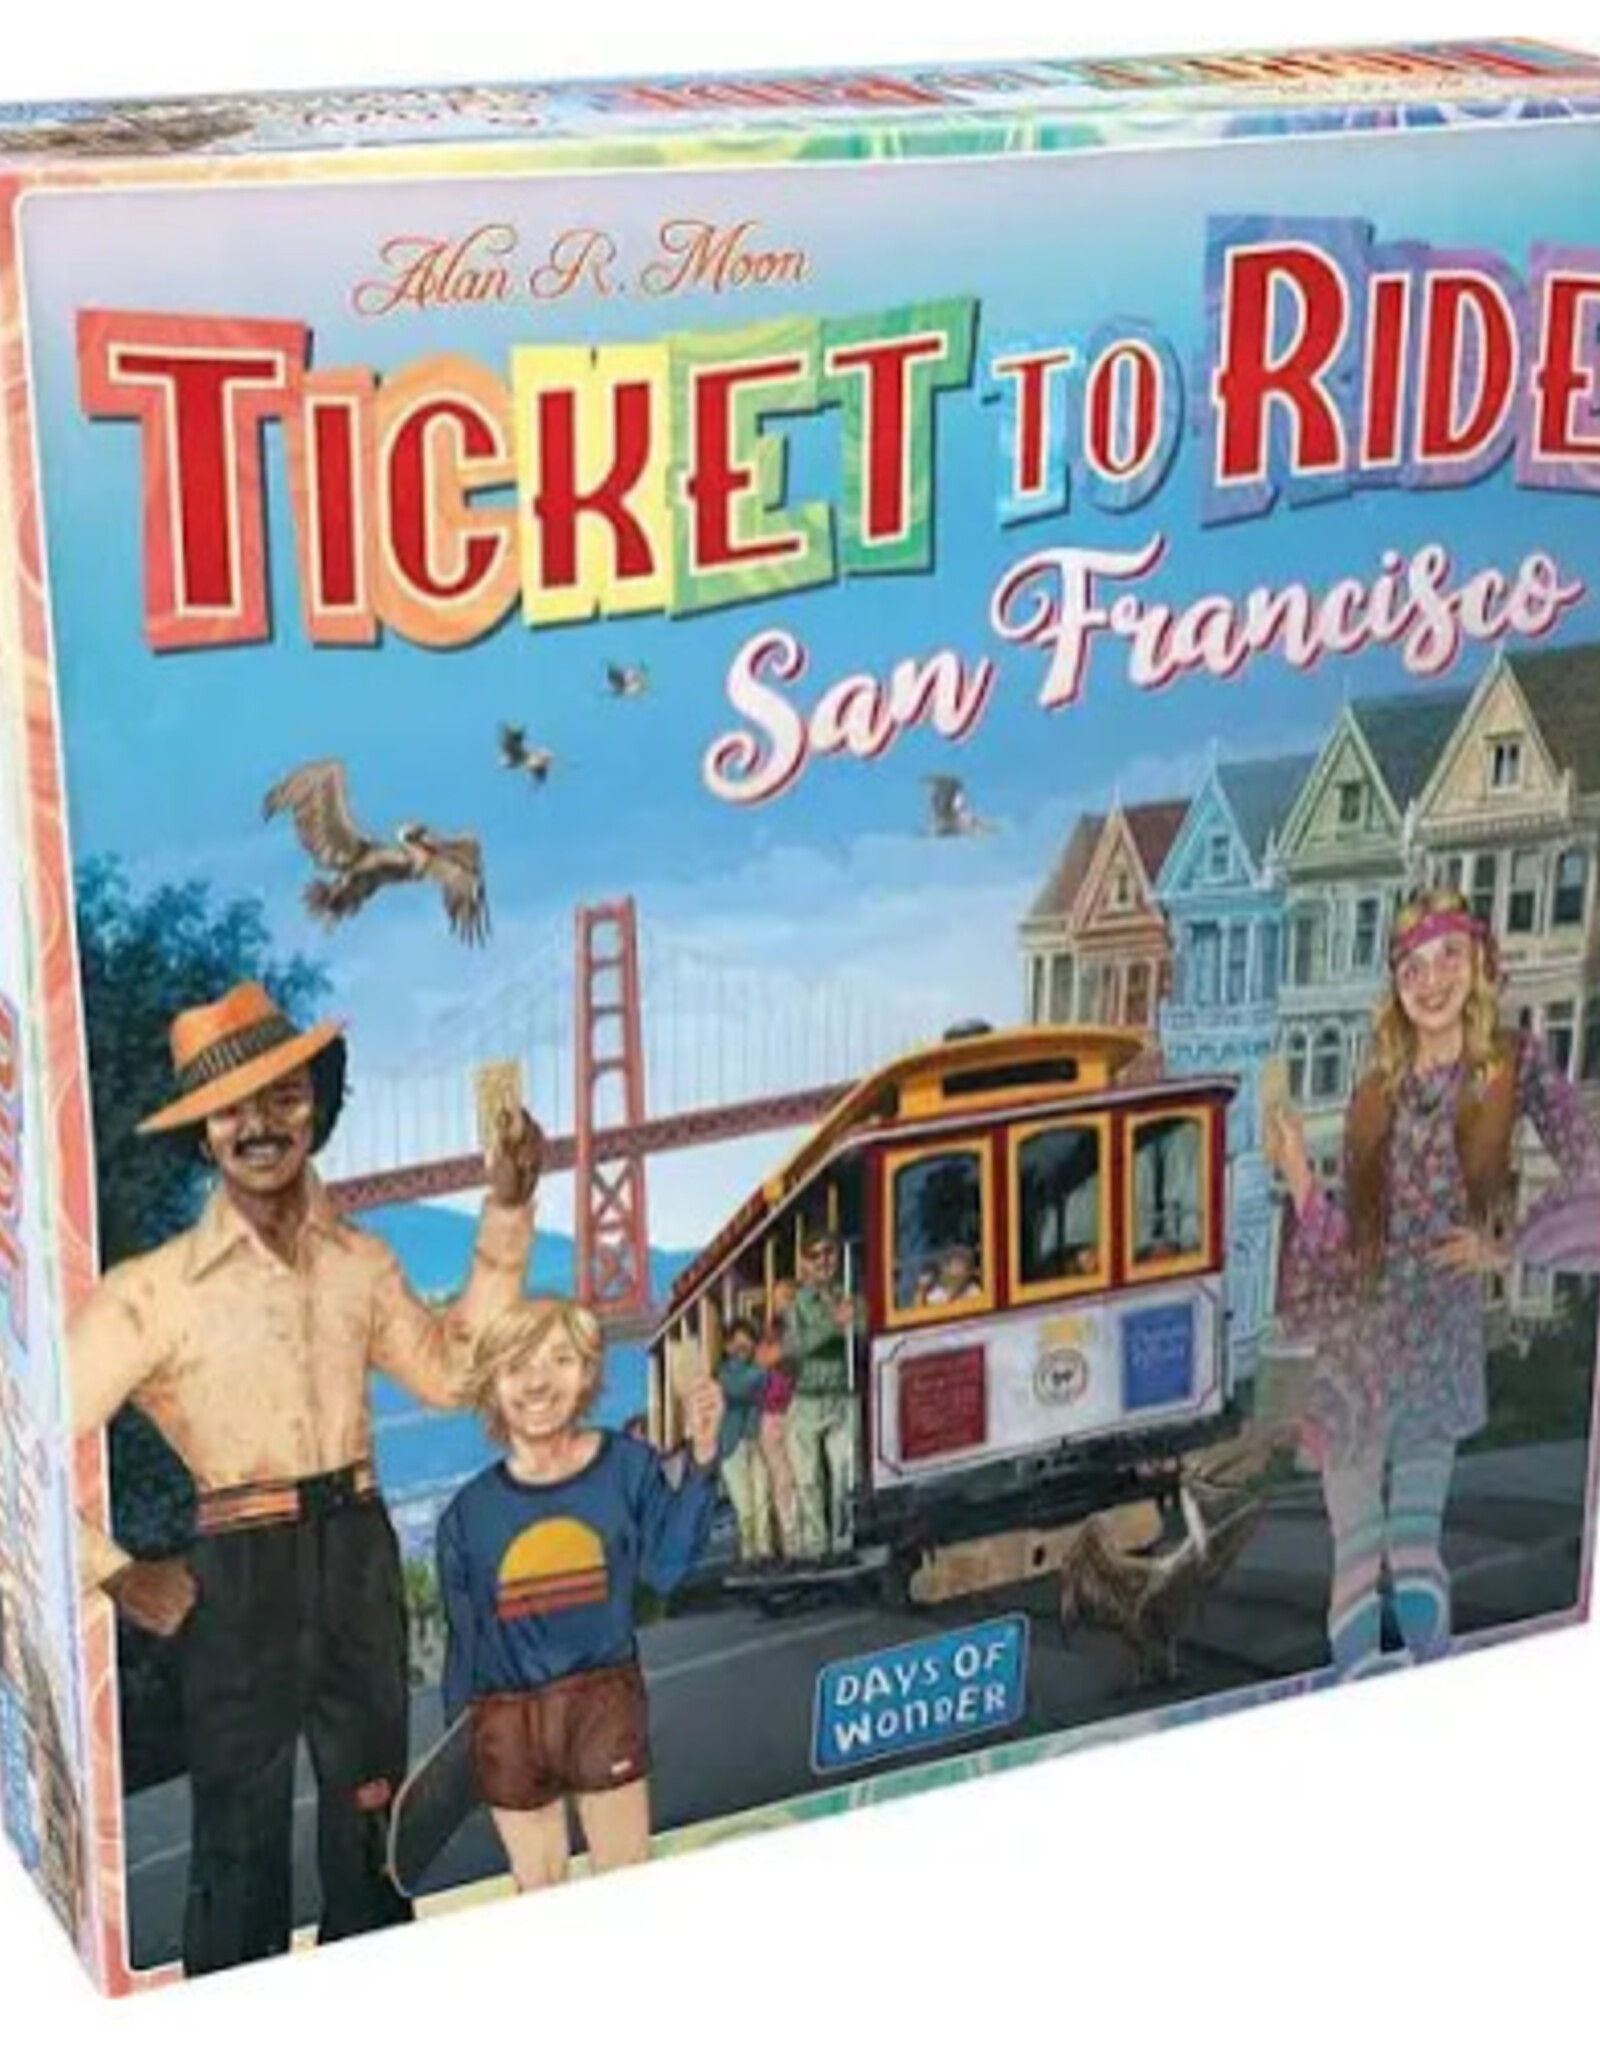 Days of Wonder Ticket to Ride Express-San Francisco